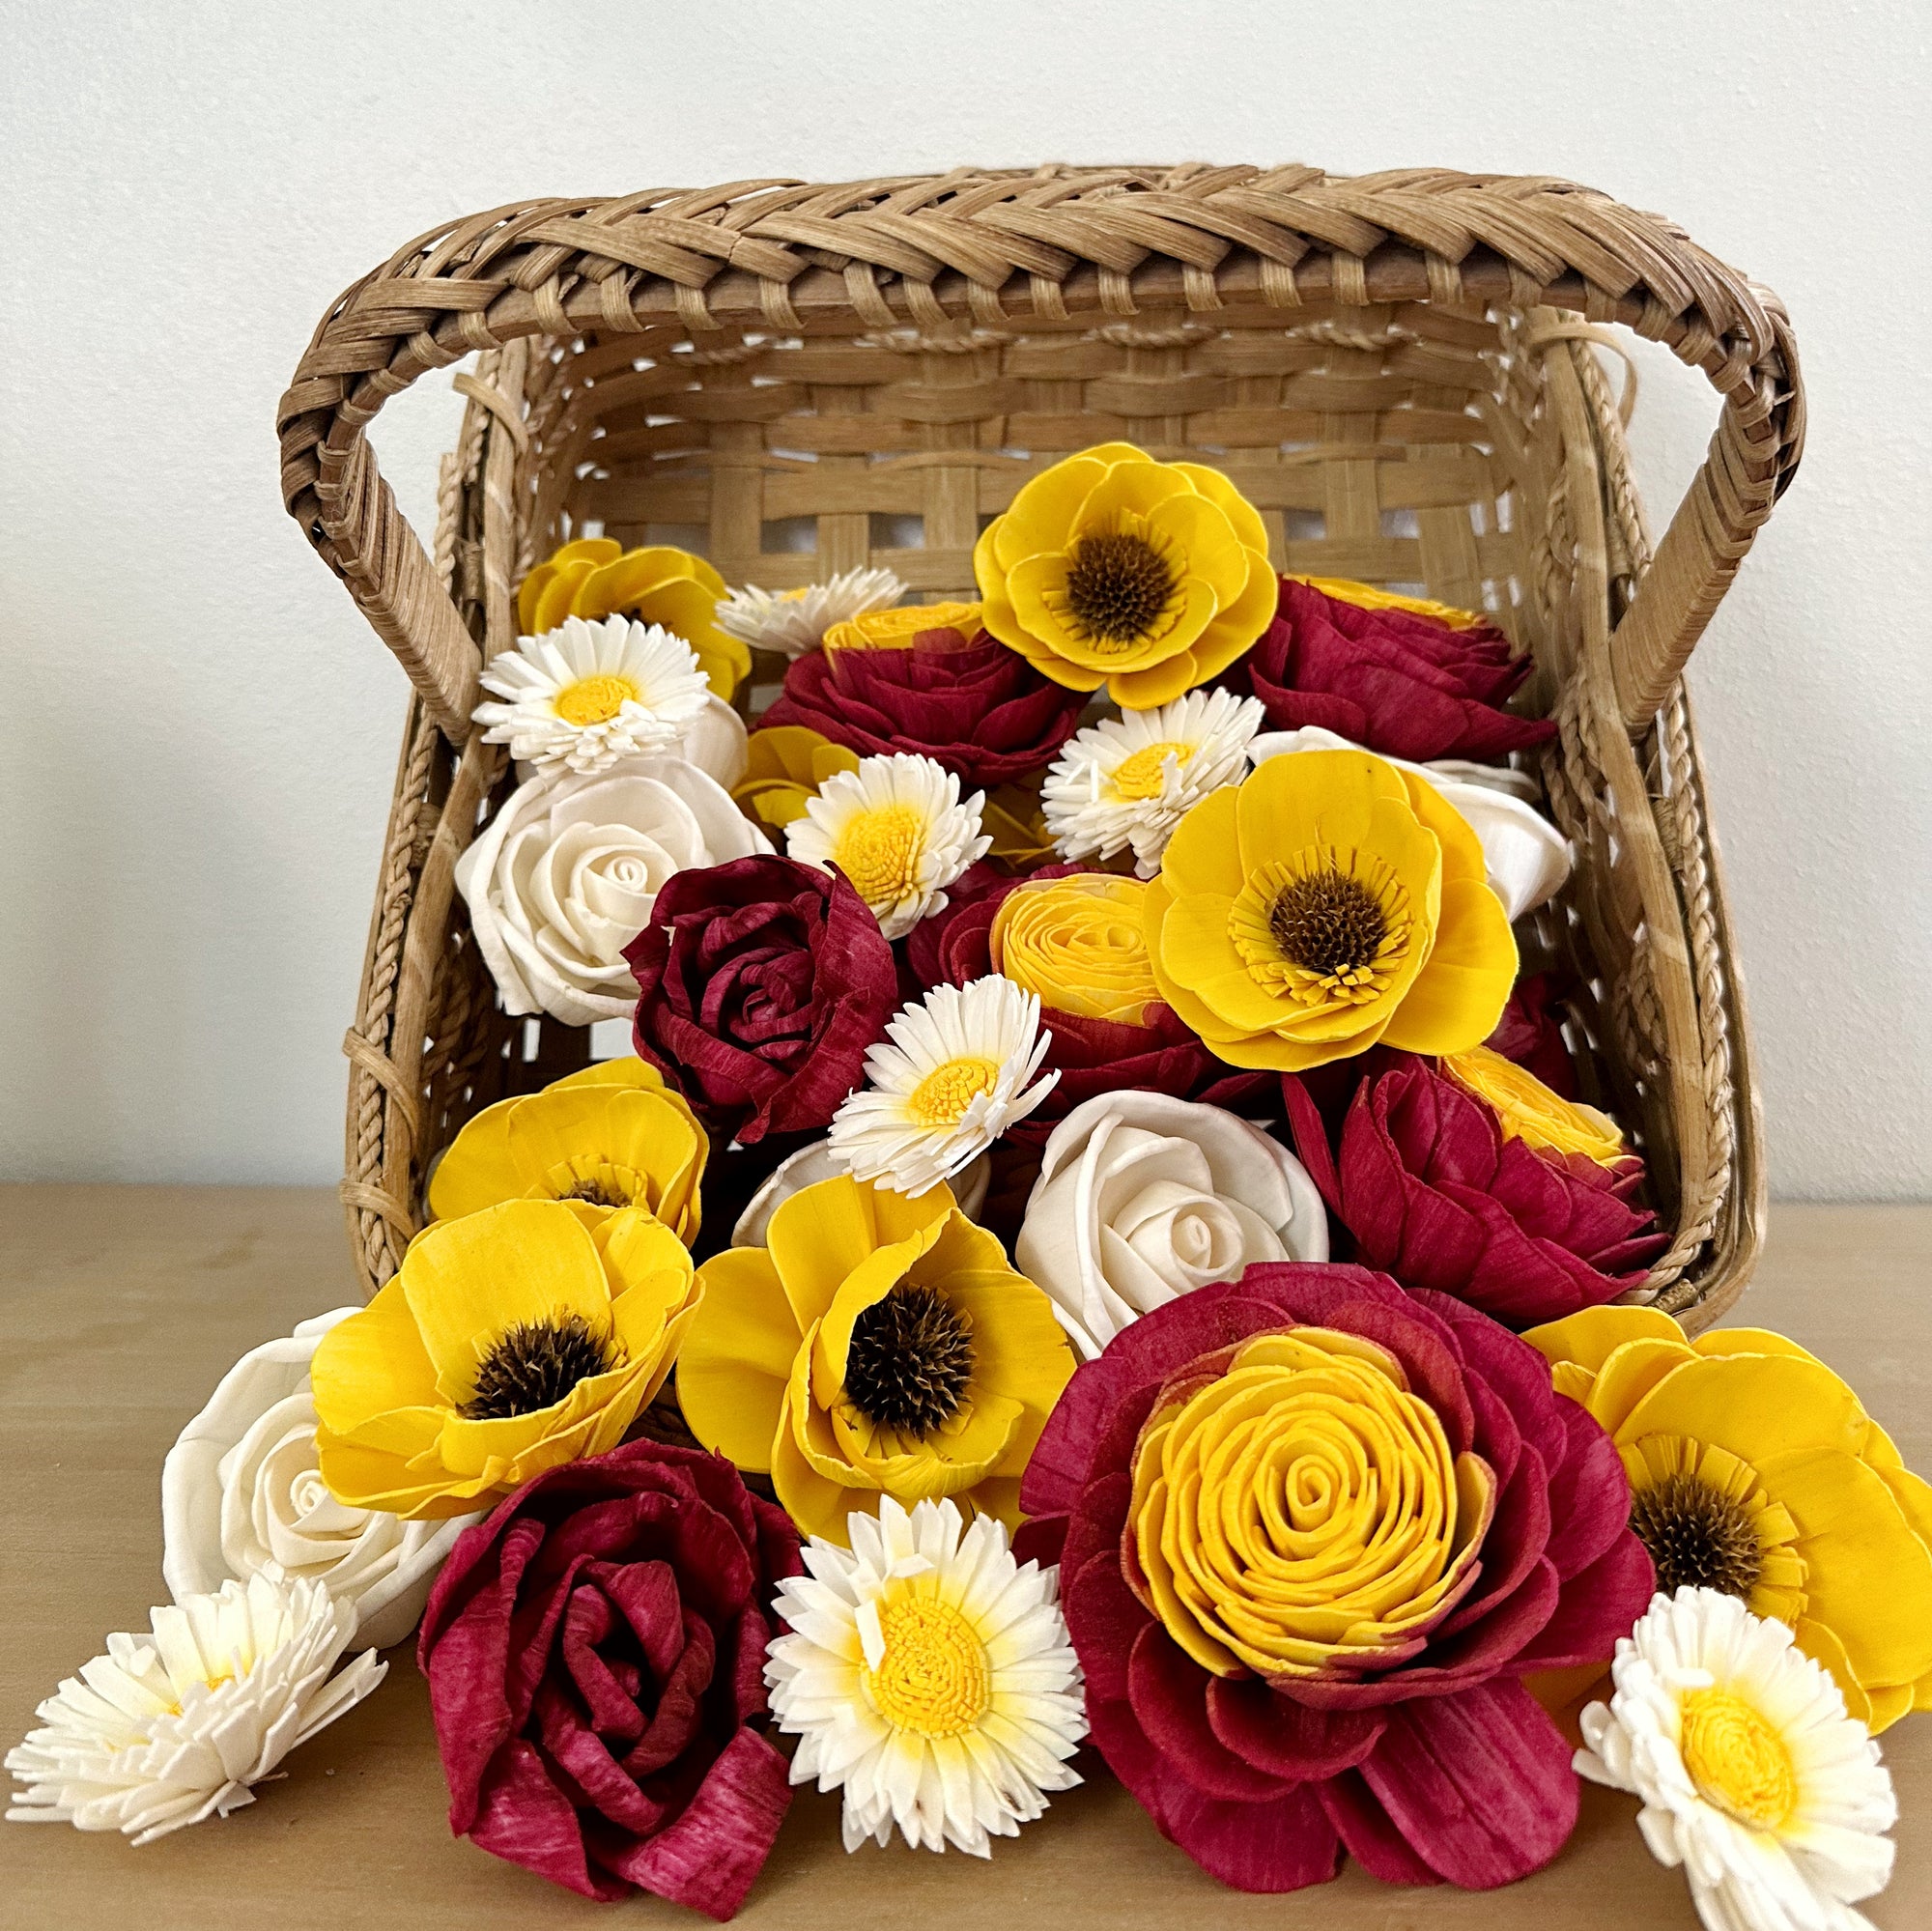 Adoring Romance- dyed sola wood flower assortment